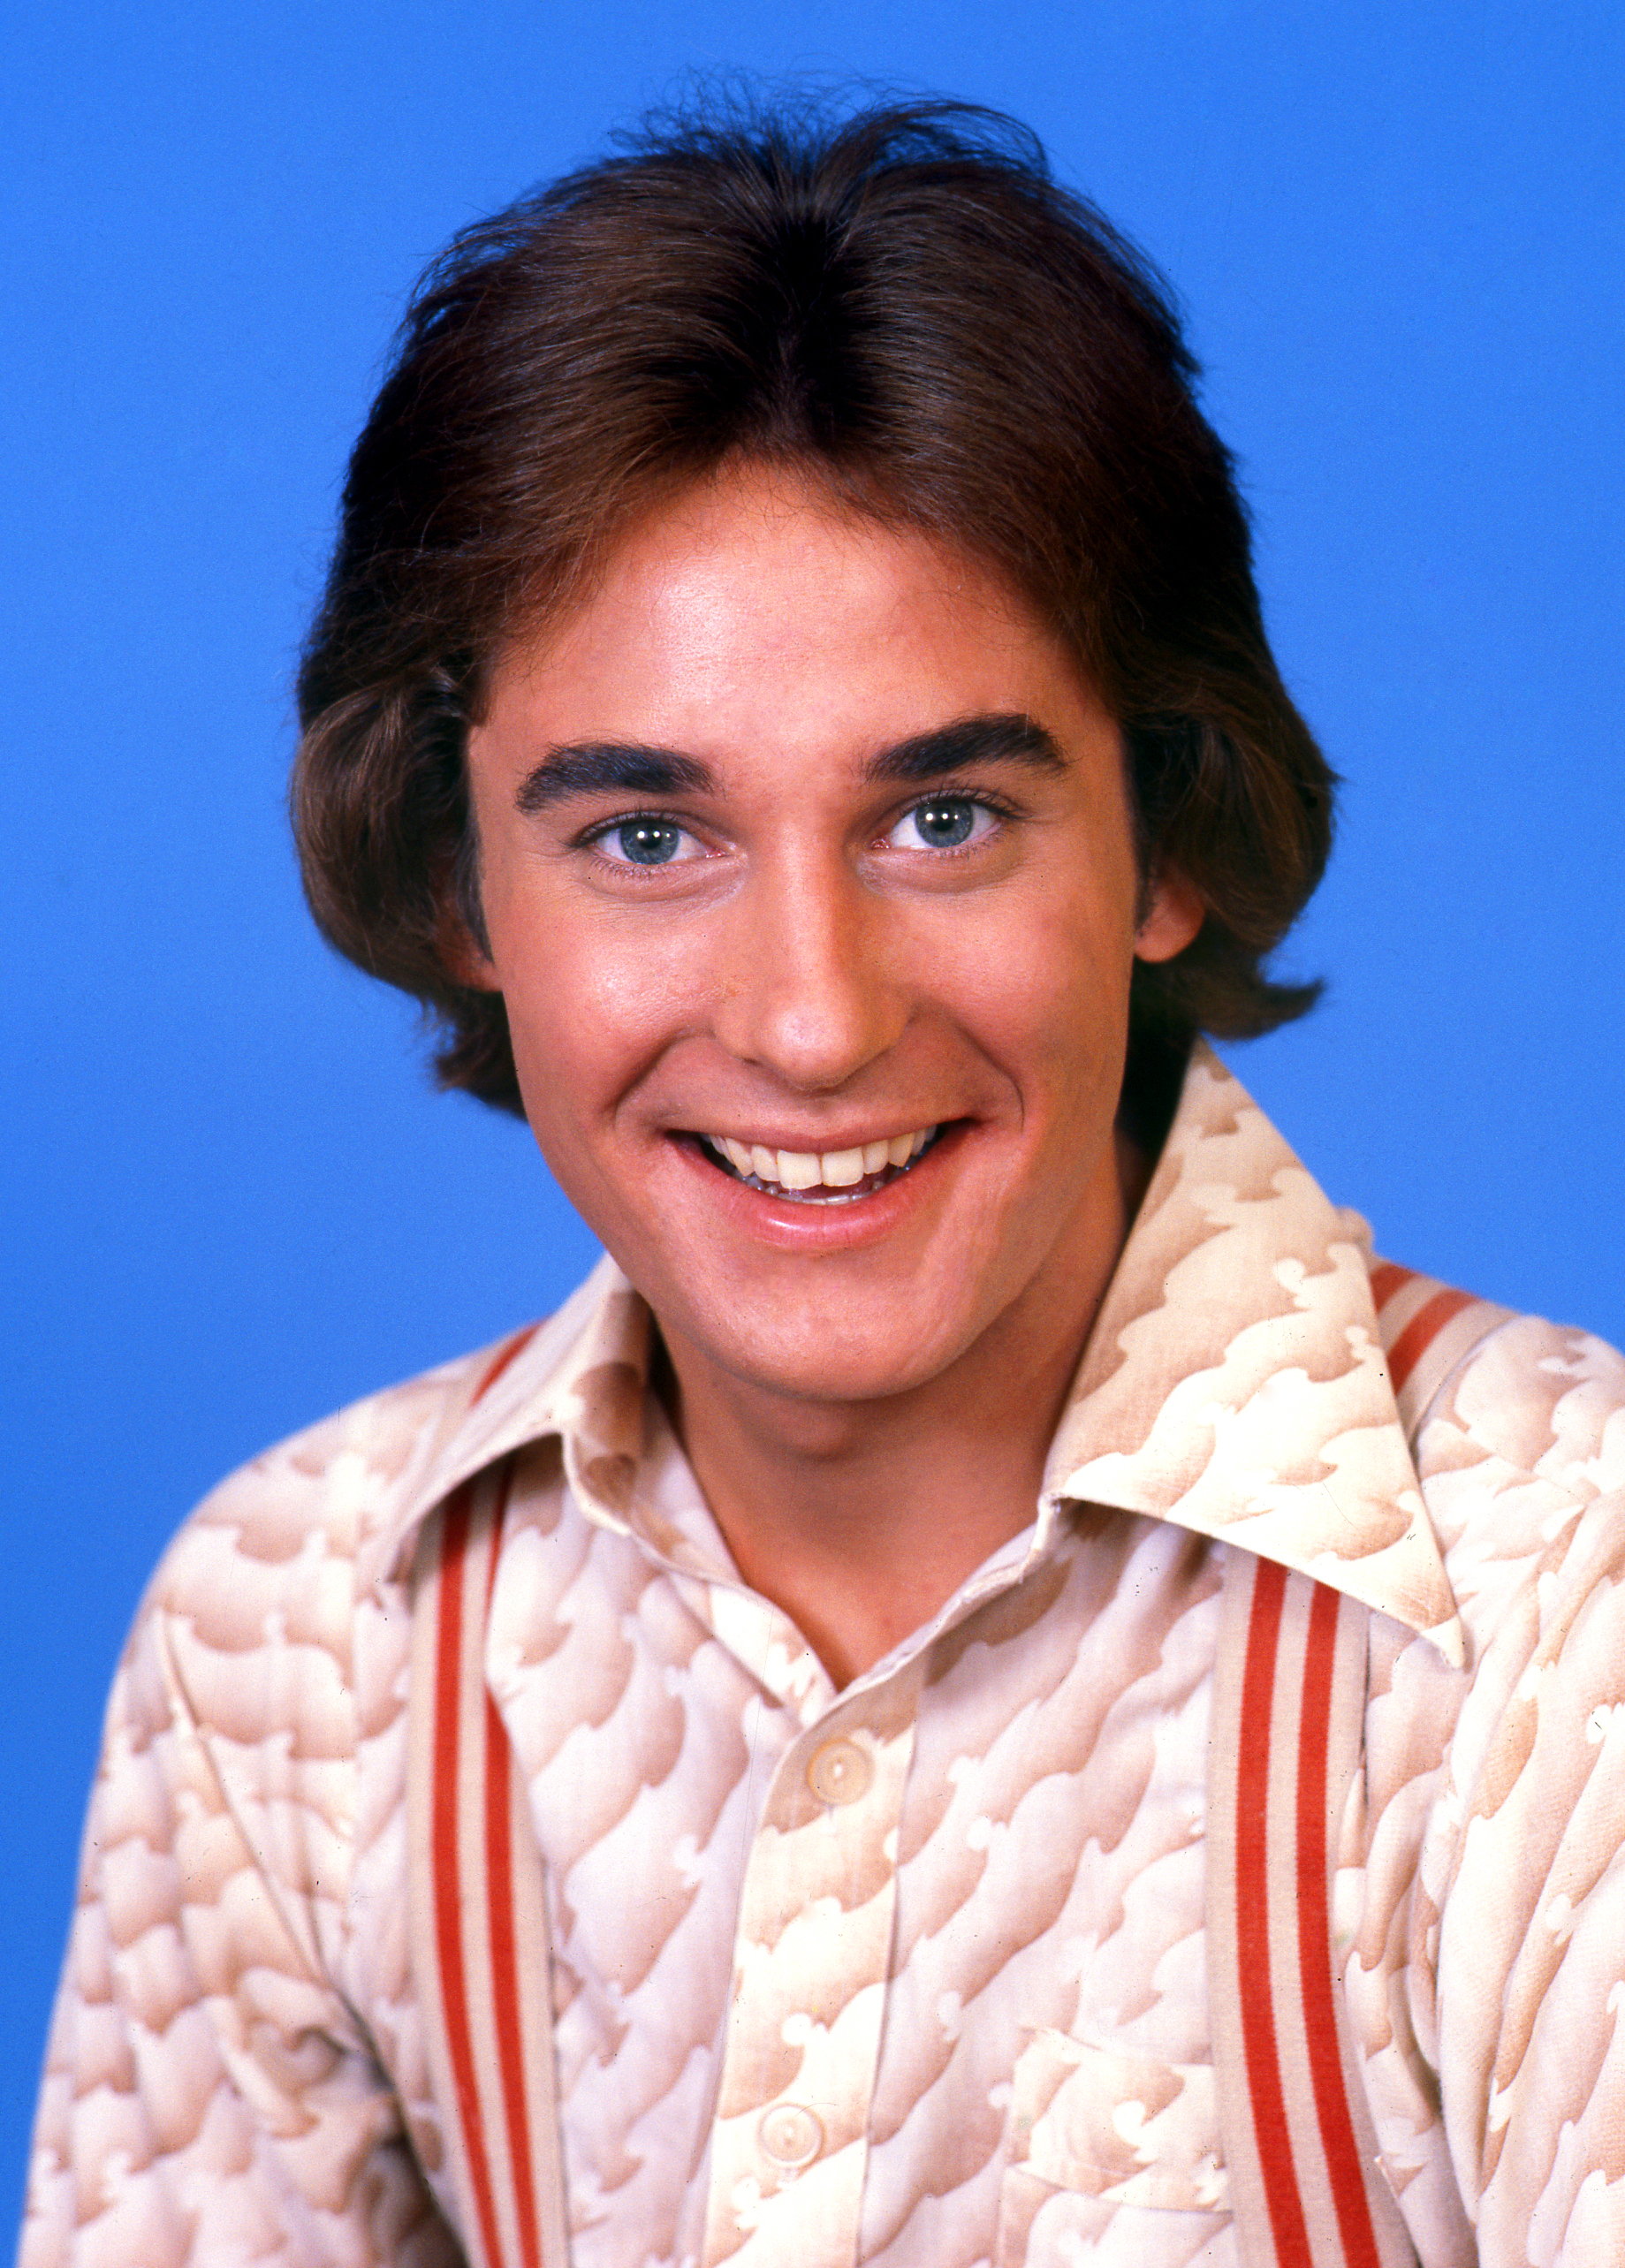 Jeremy Kewley as Robbie Stewart in ARCADE (1979-1980).